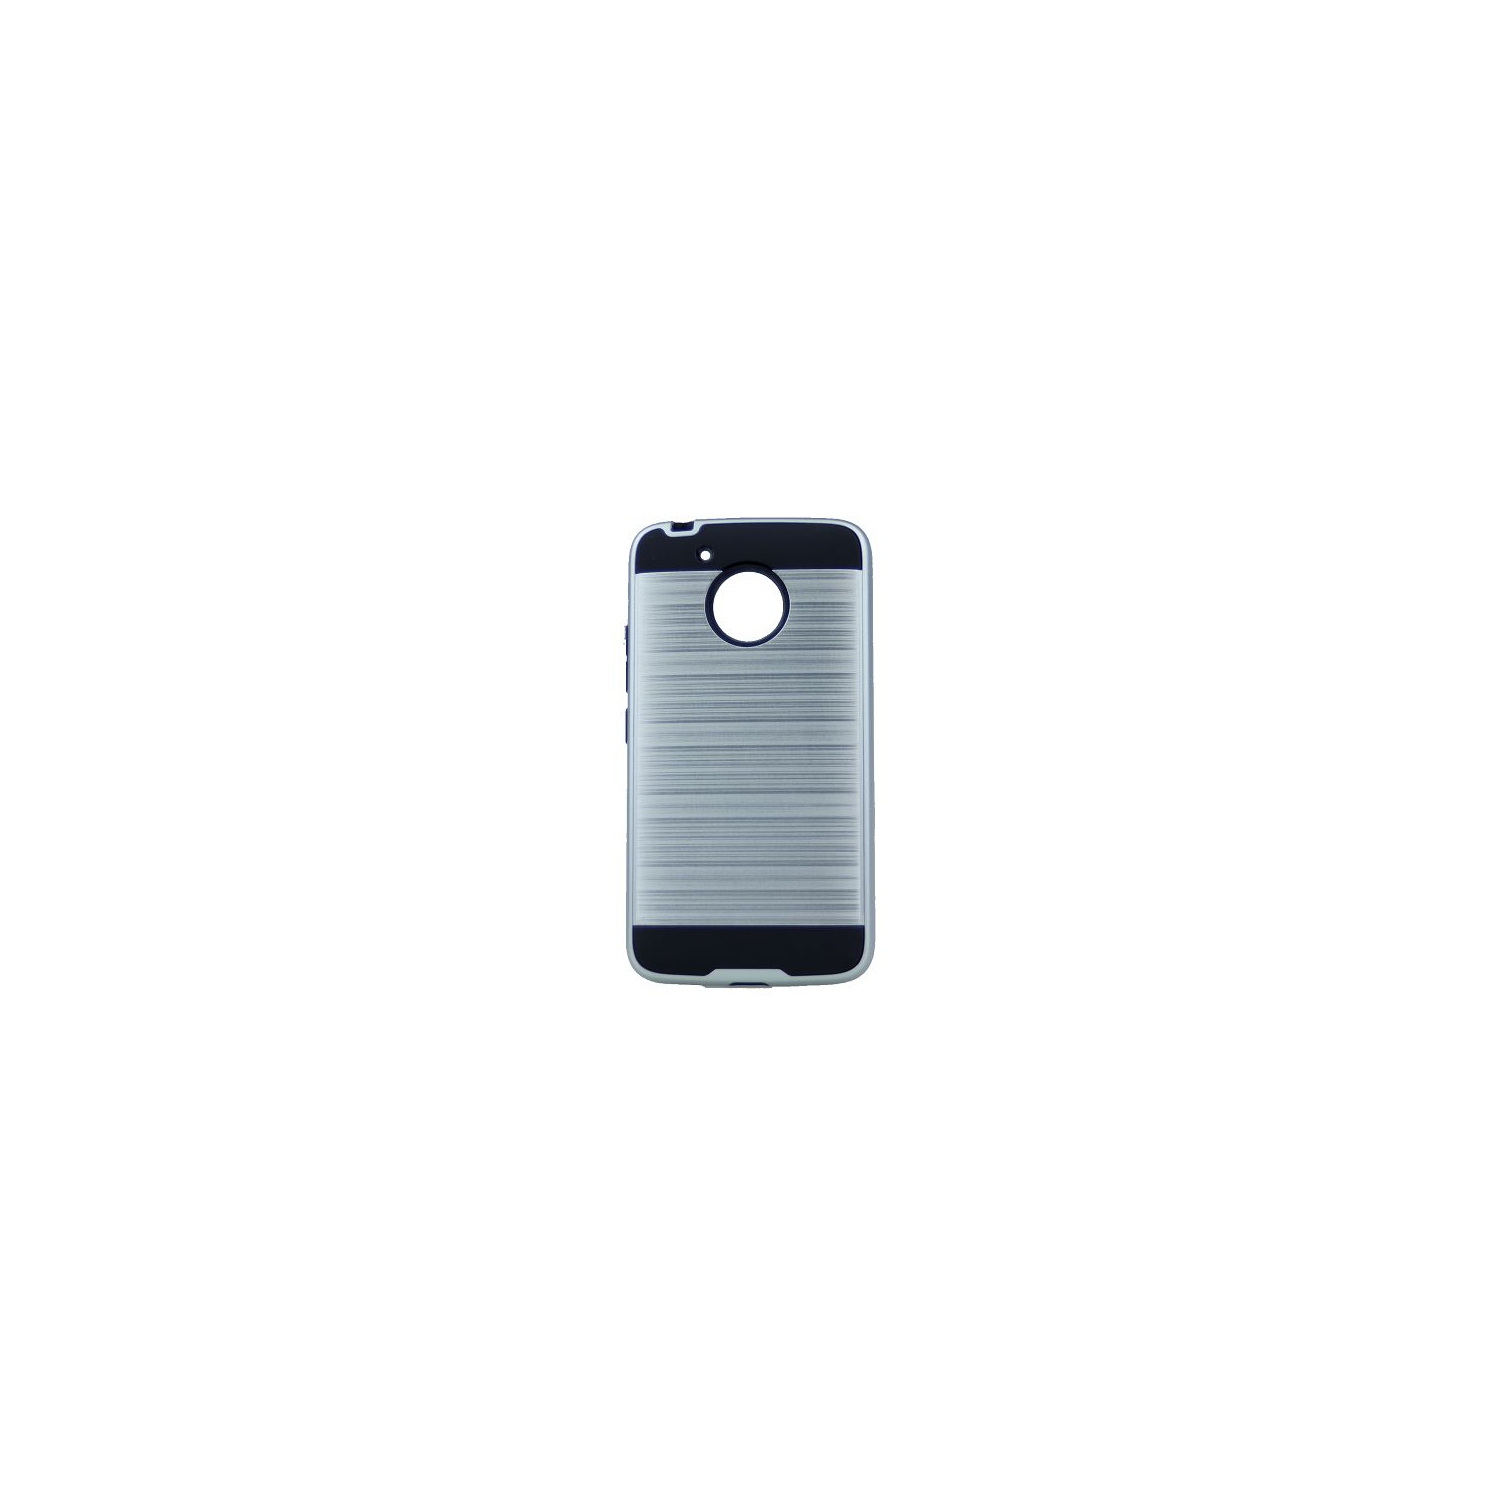 Moto G5 Plus Blush Texture Hard Cover Case, Silver